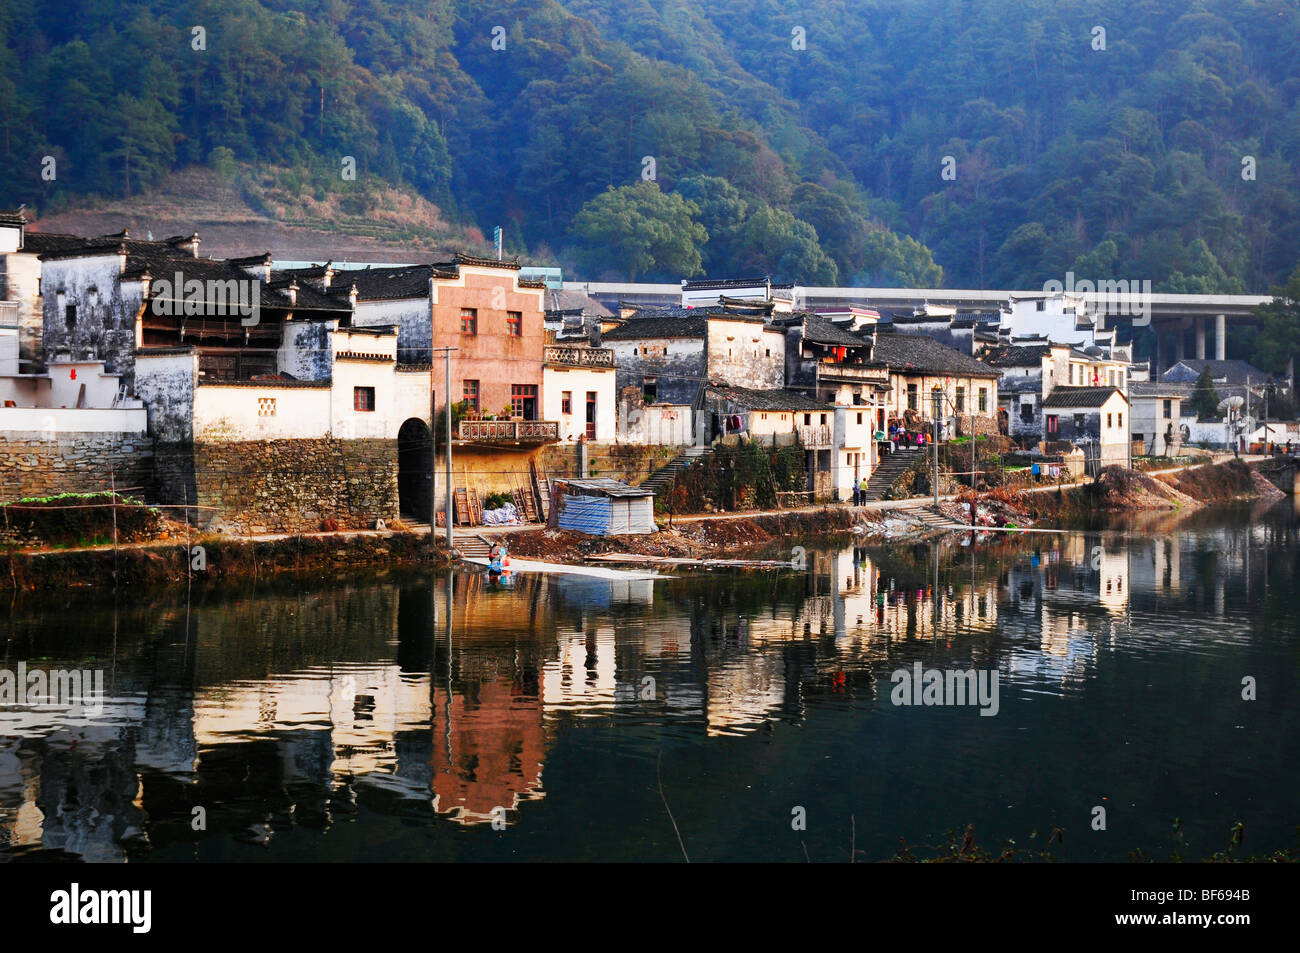 Traditionelle Hui Stil Architektur entlang des Flusses, Xiadan Dorf, Wuyuan County, Jiangxi Provinz, China Stockfoto